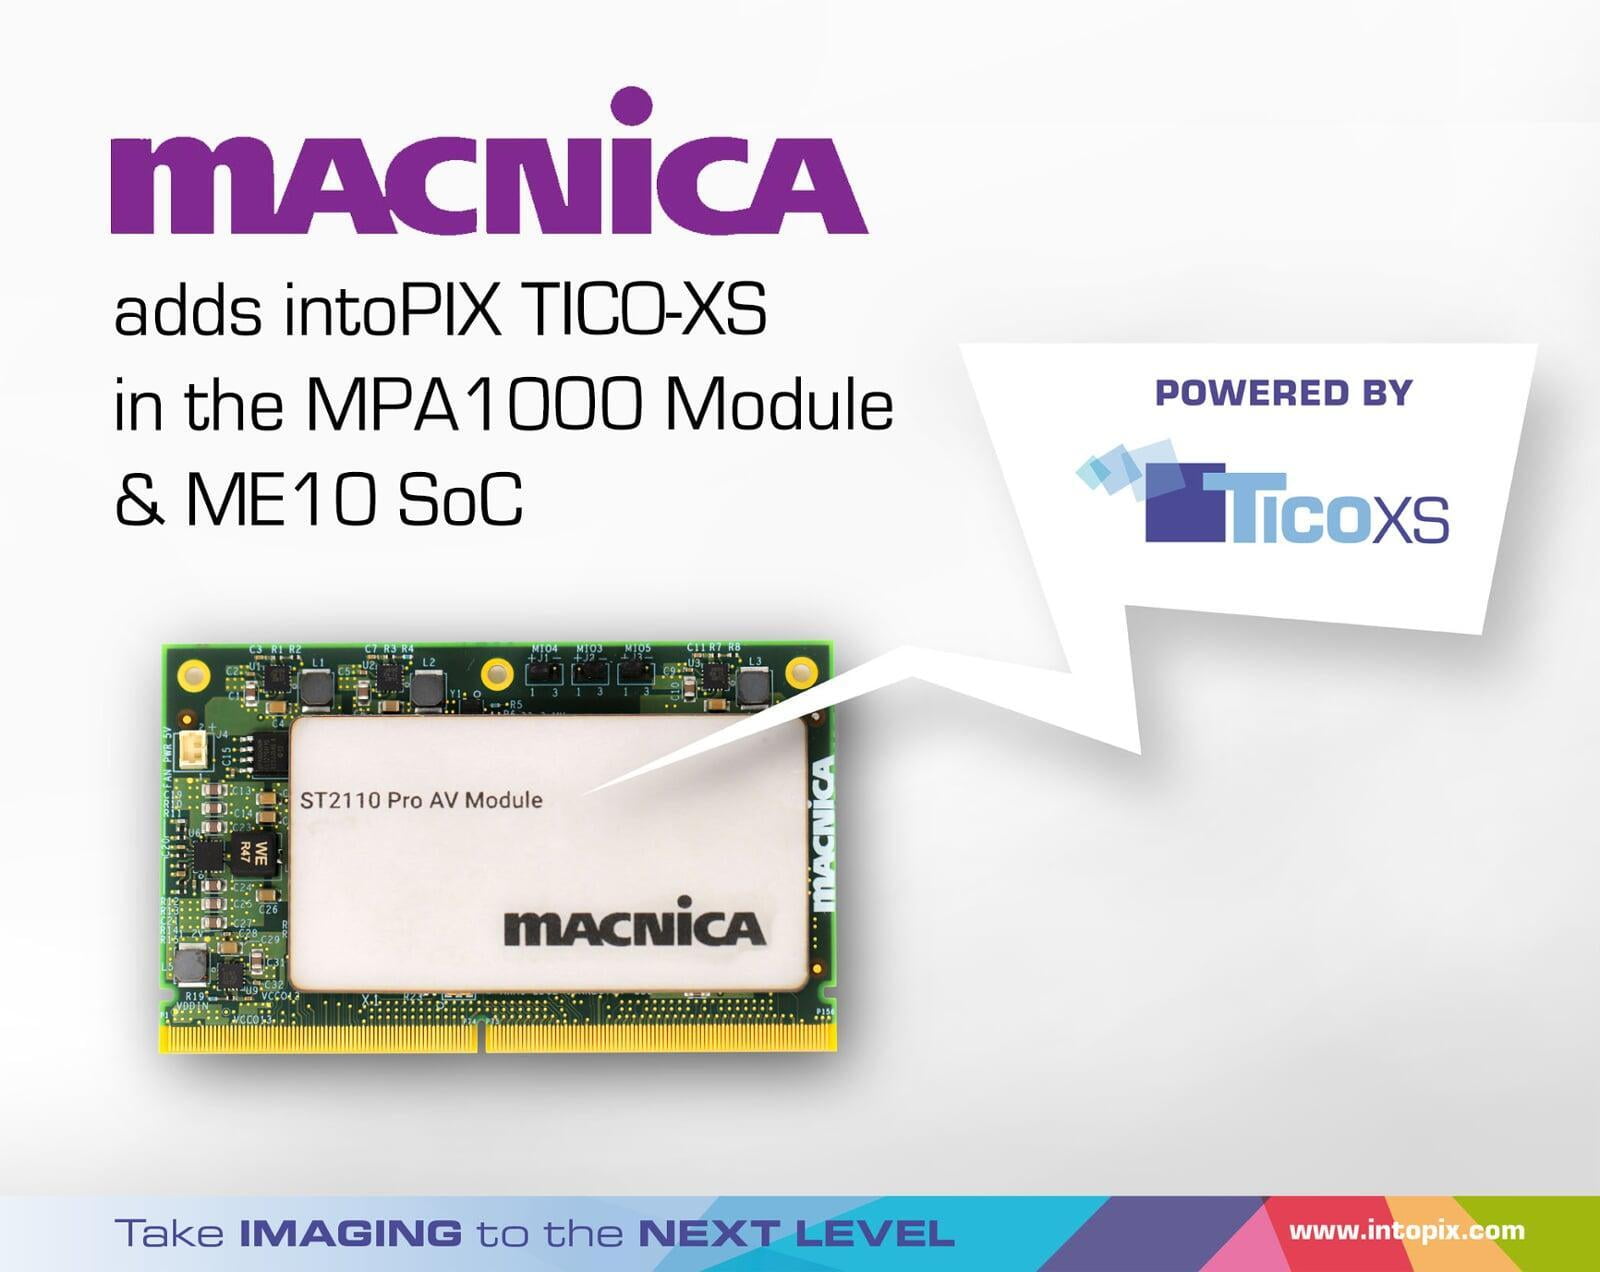 Macnica adopts intoPIX TicoXS for its 4K ProAV OEM solutions